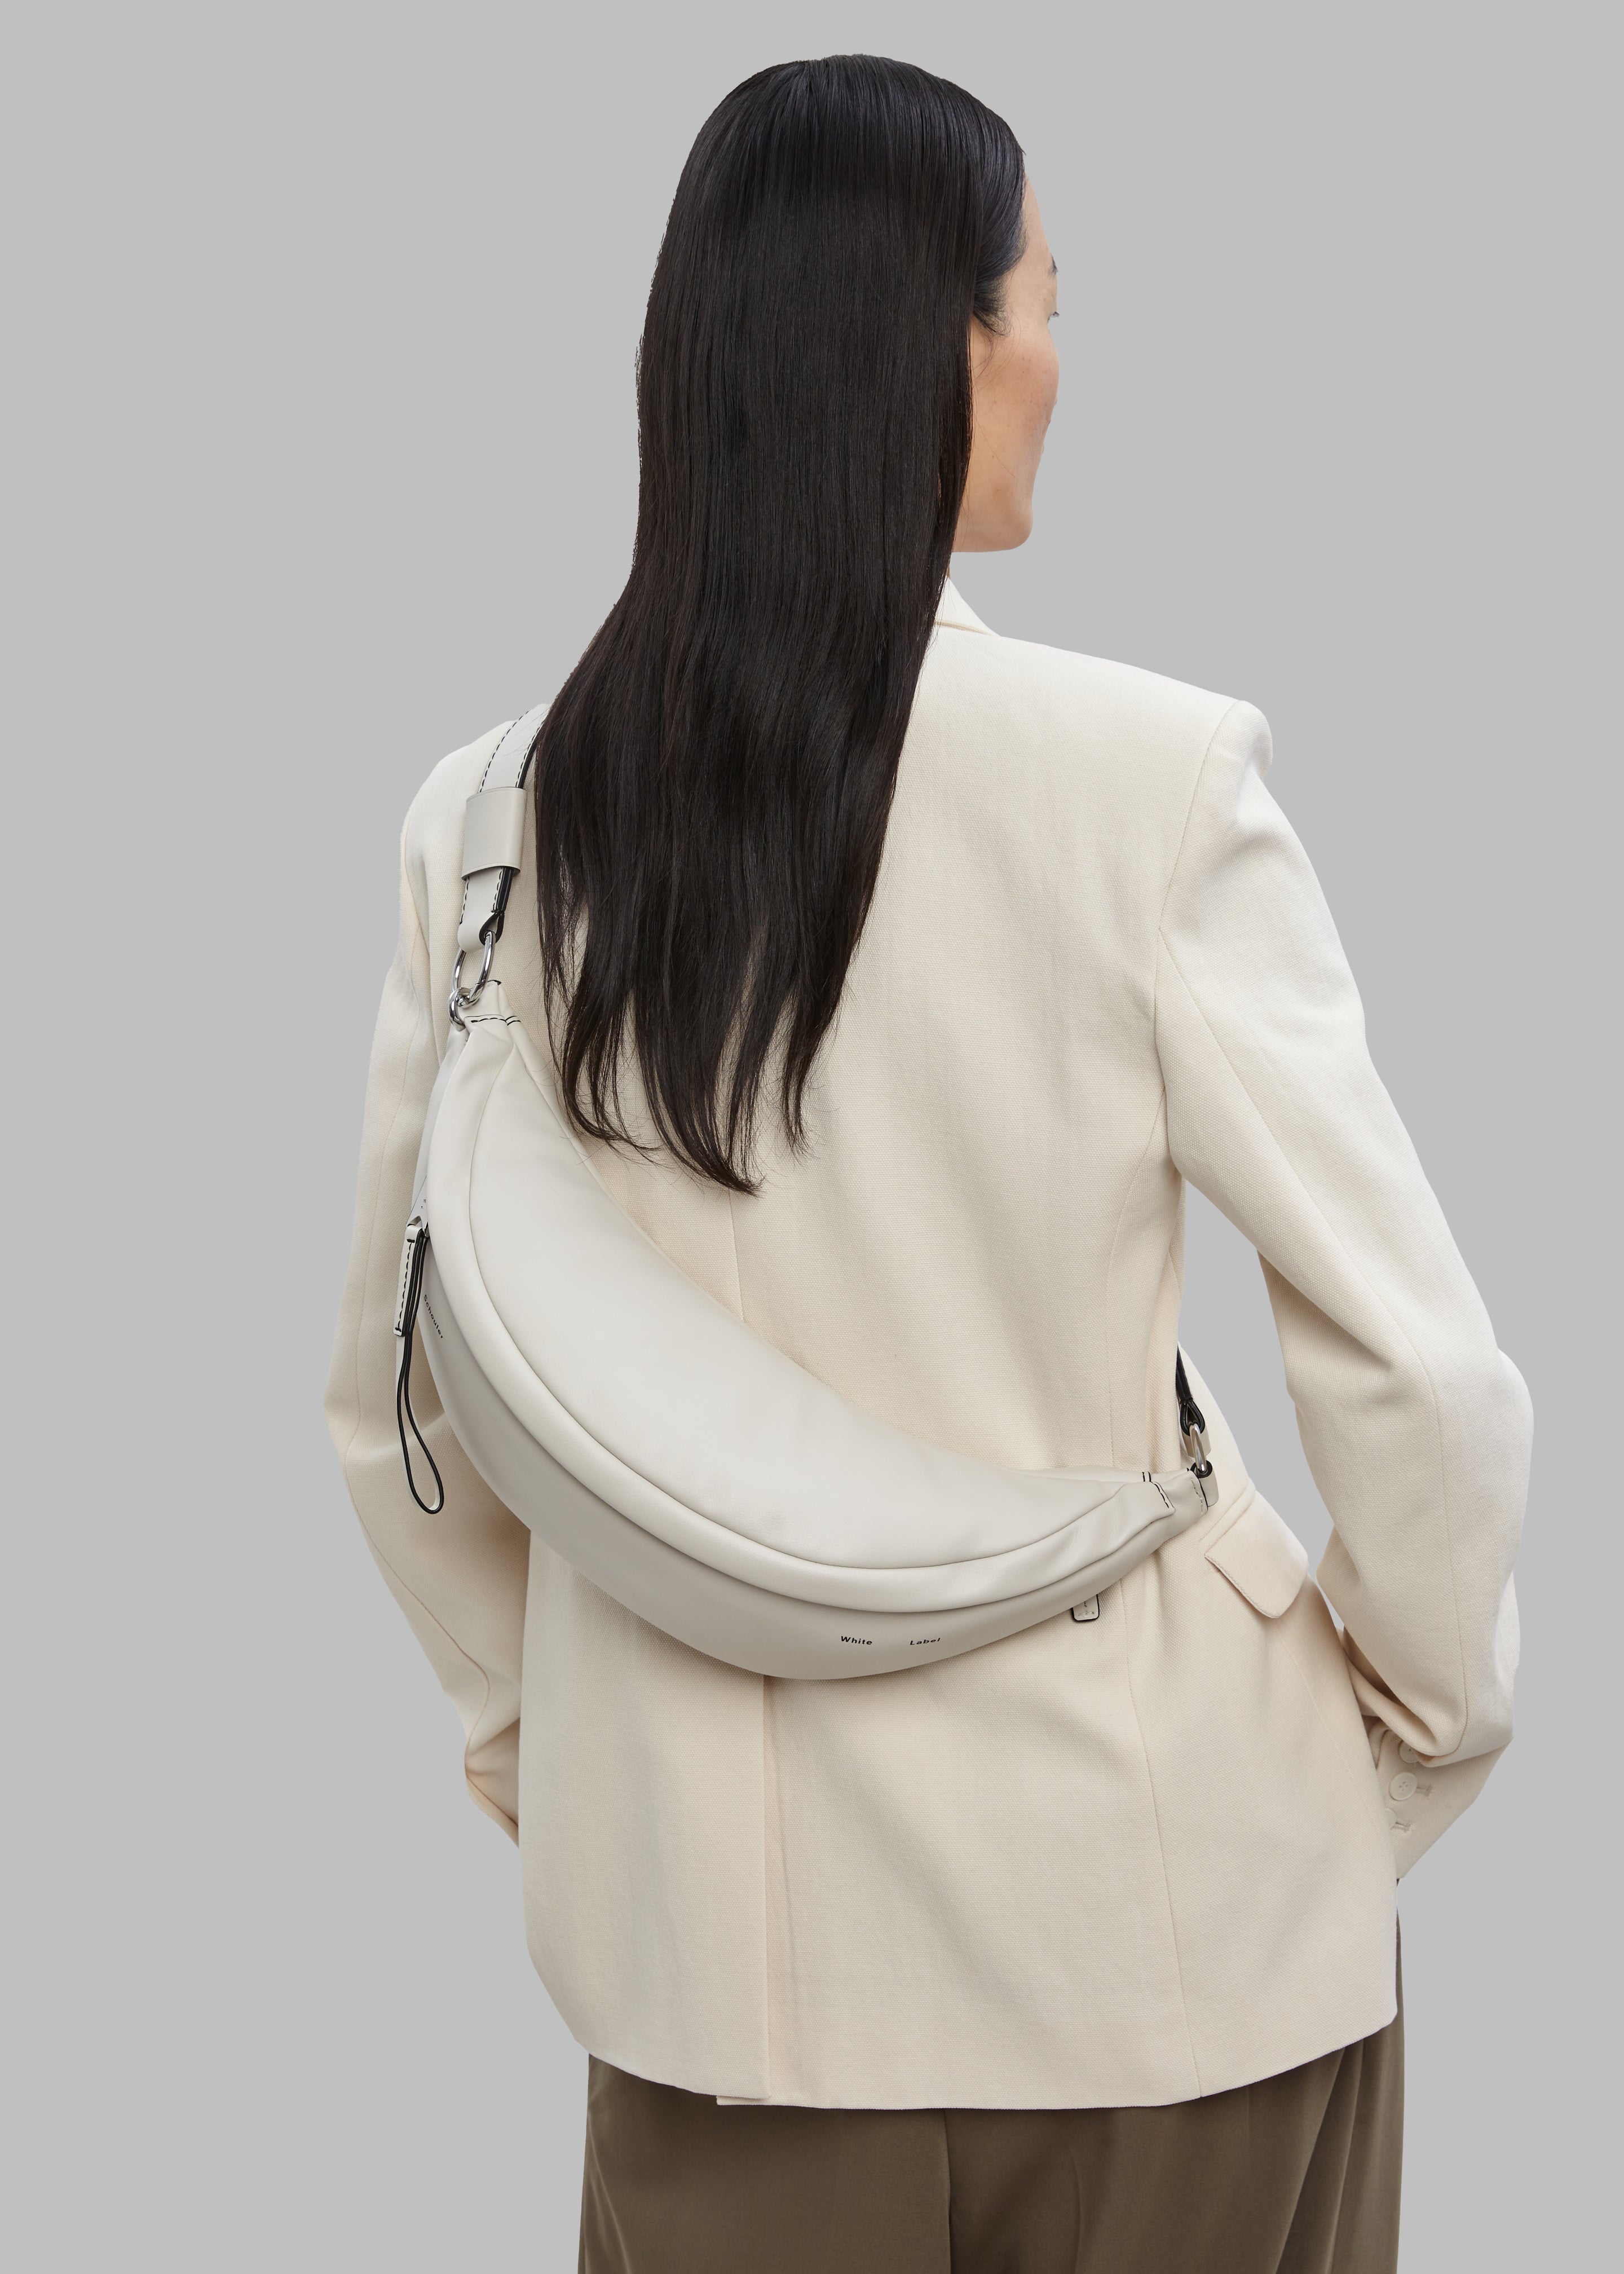 Proenza Schouler White Label Stanton Leather Sling Bag - Vanilla - 8